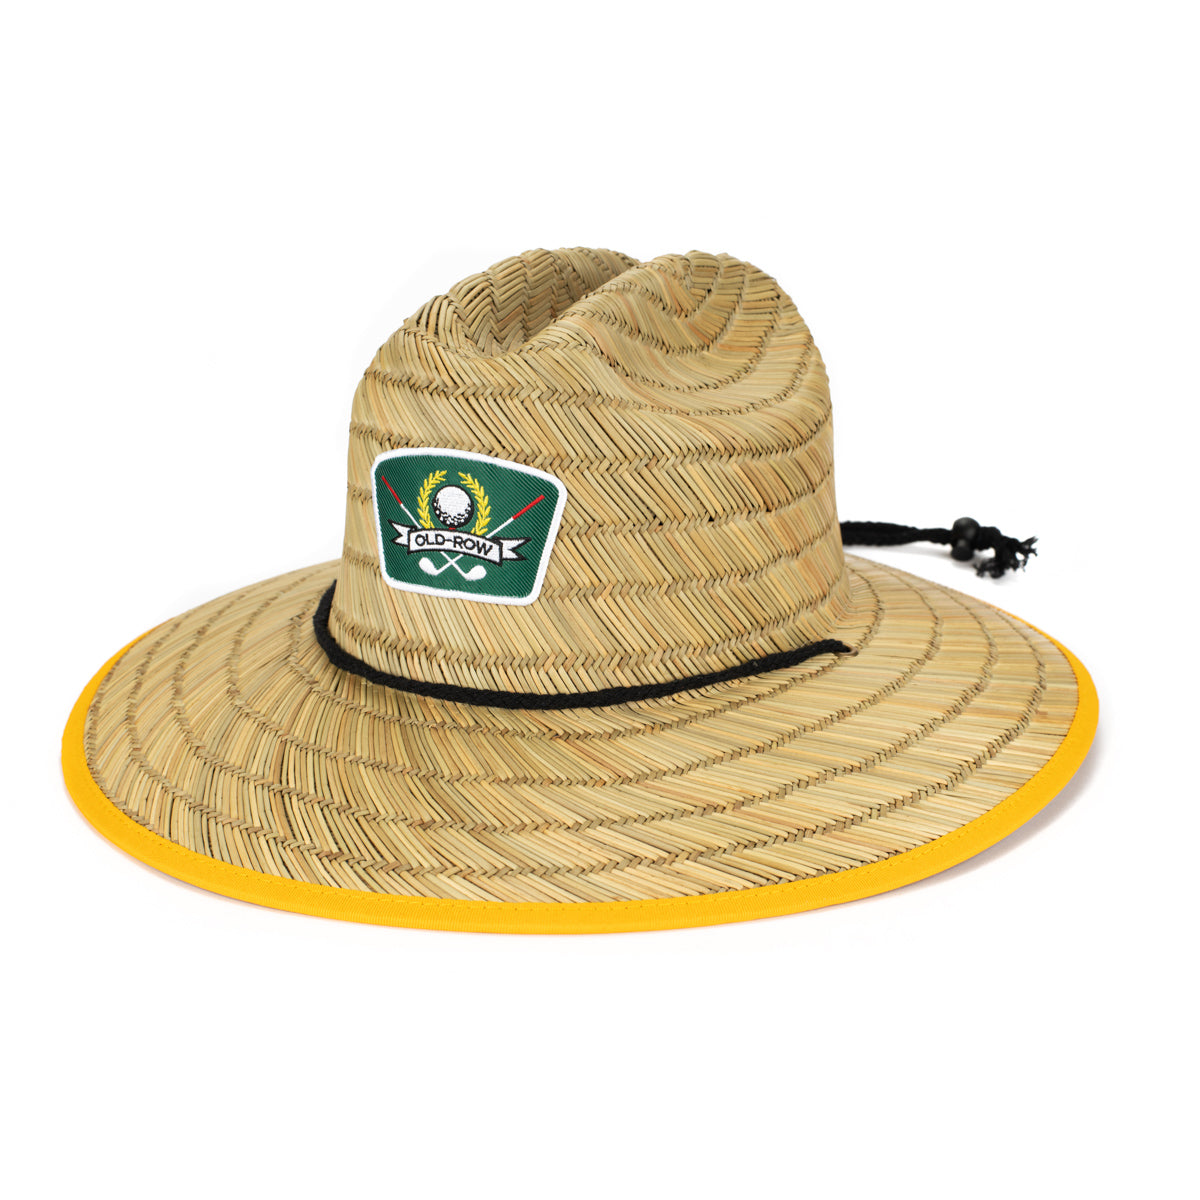 Old Row Golf Straw Lifeguard Hat